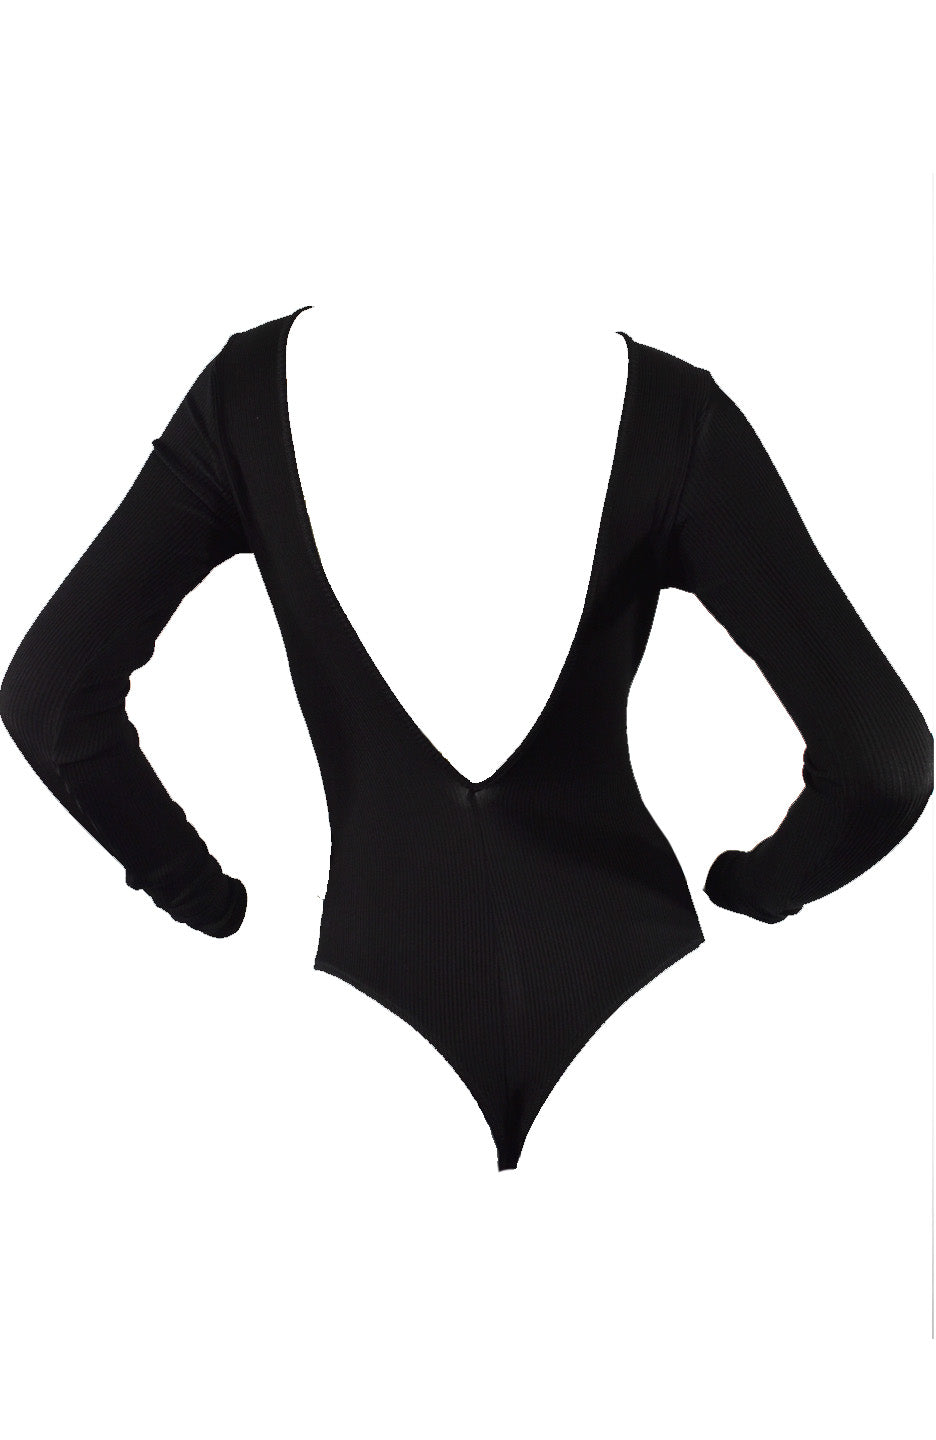 Goldsign The Rib Deep V Back Bodysuit - Size XS